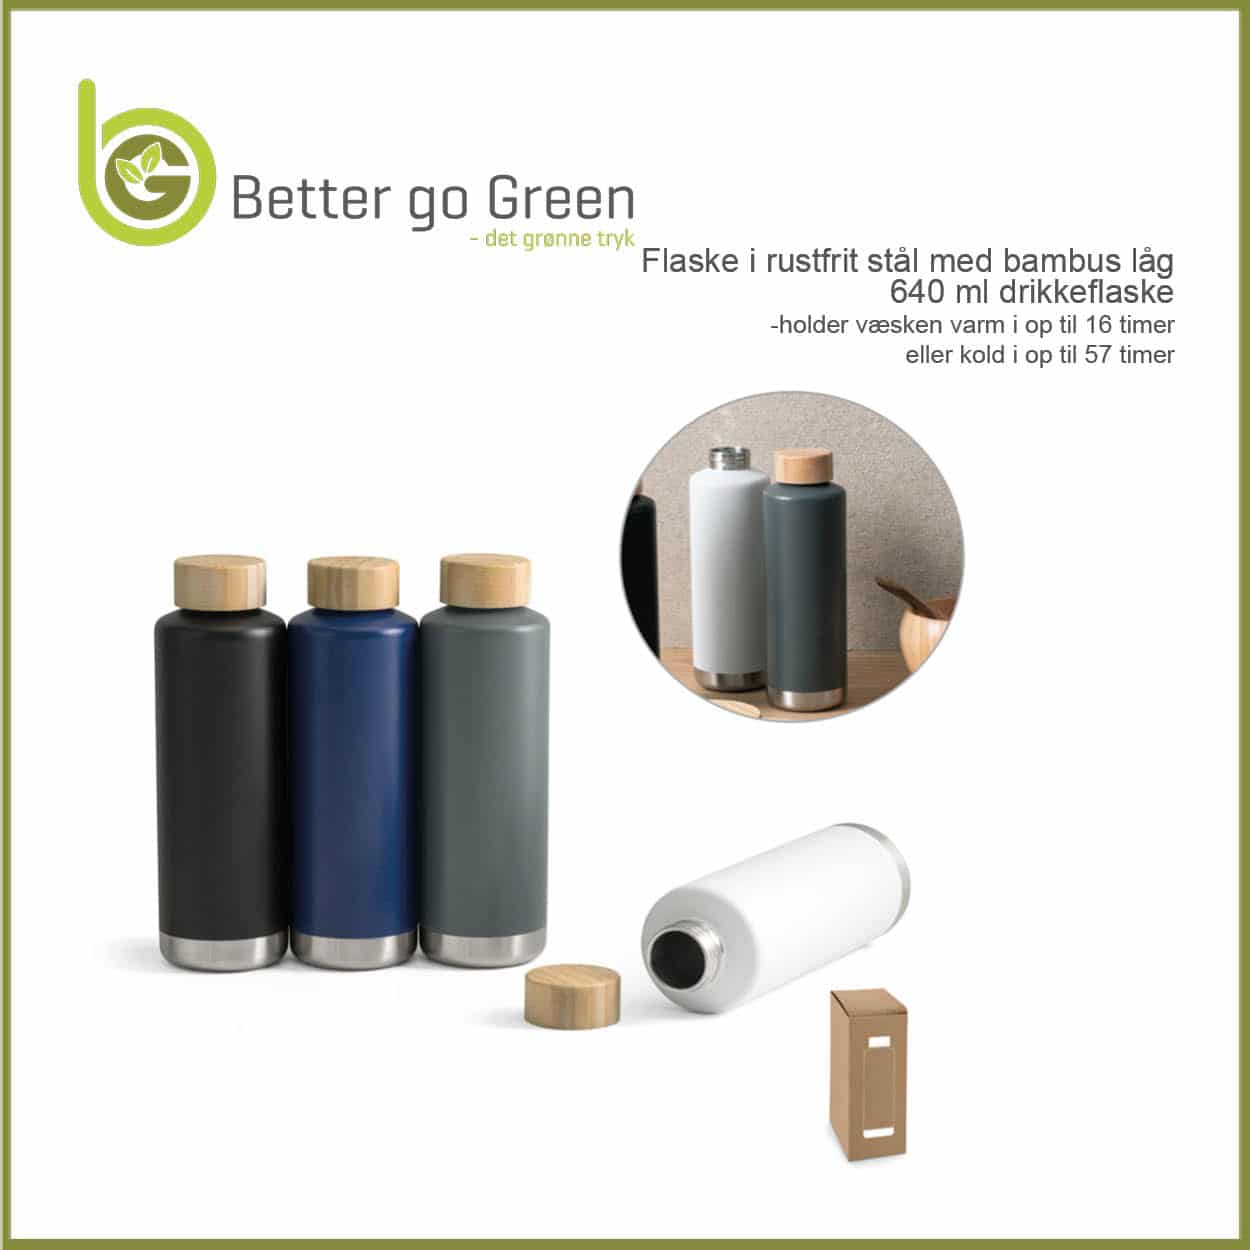 Termoflaske i miljøvenligt materiale med logo tryk. BetterGoGreen.dk